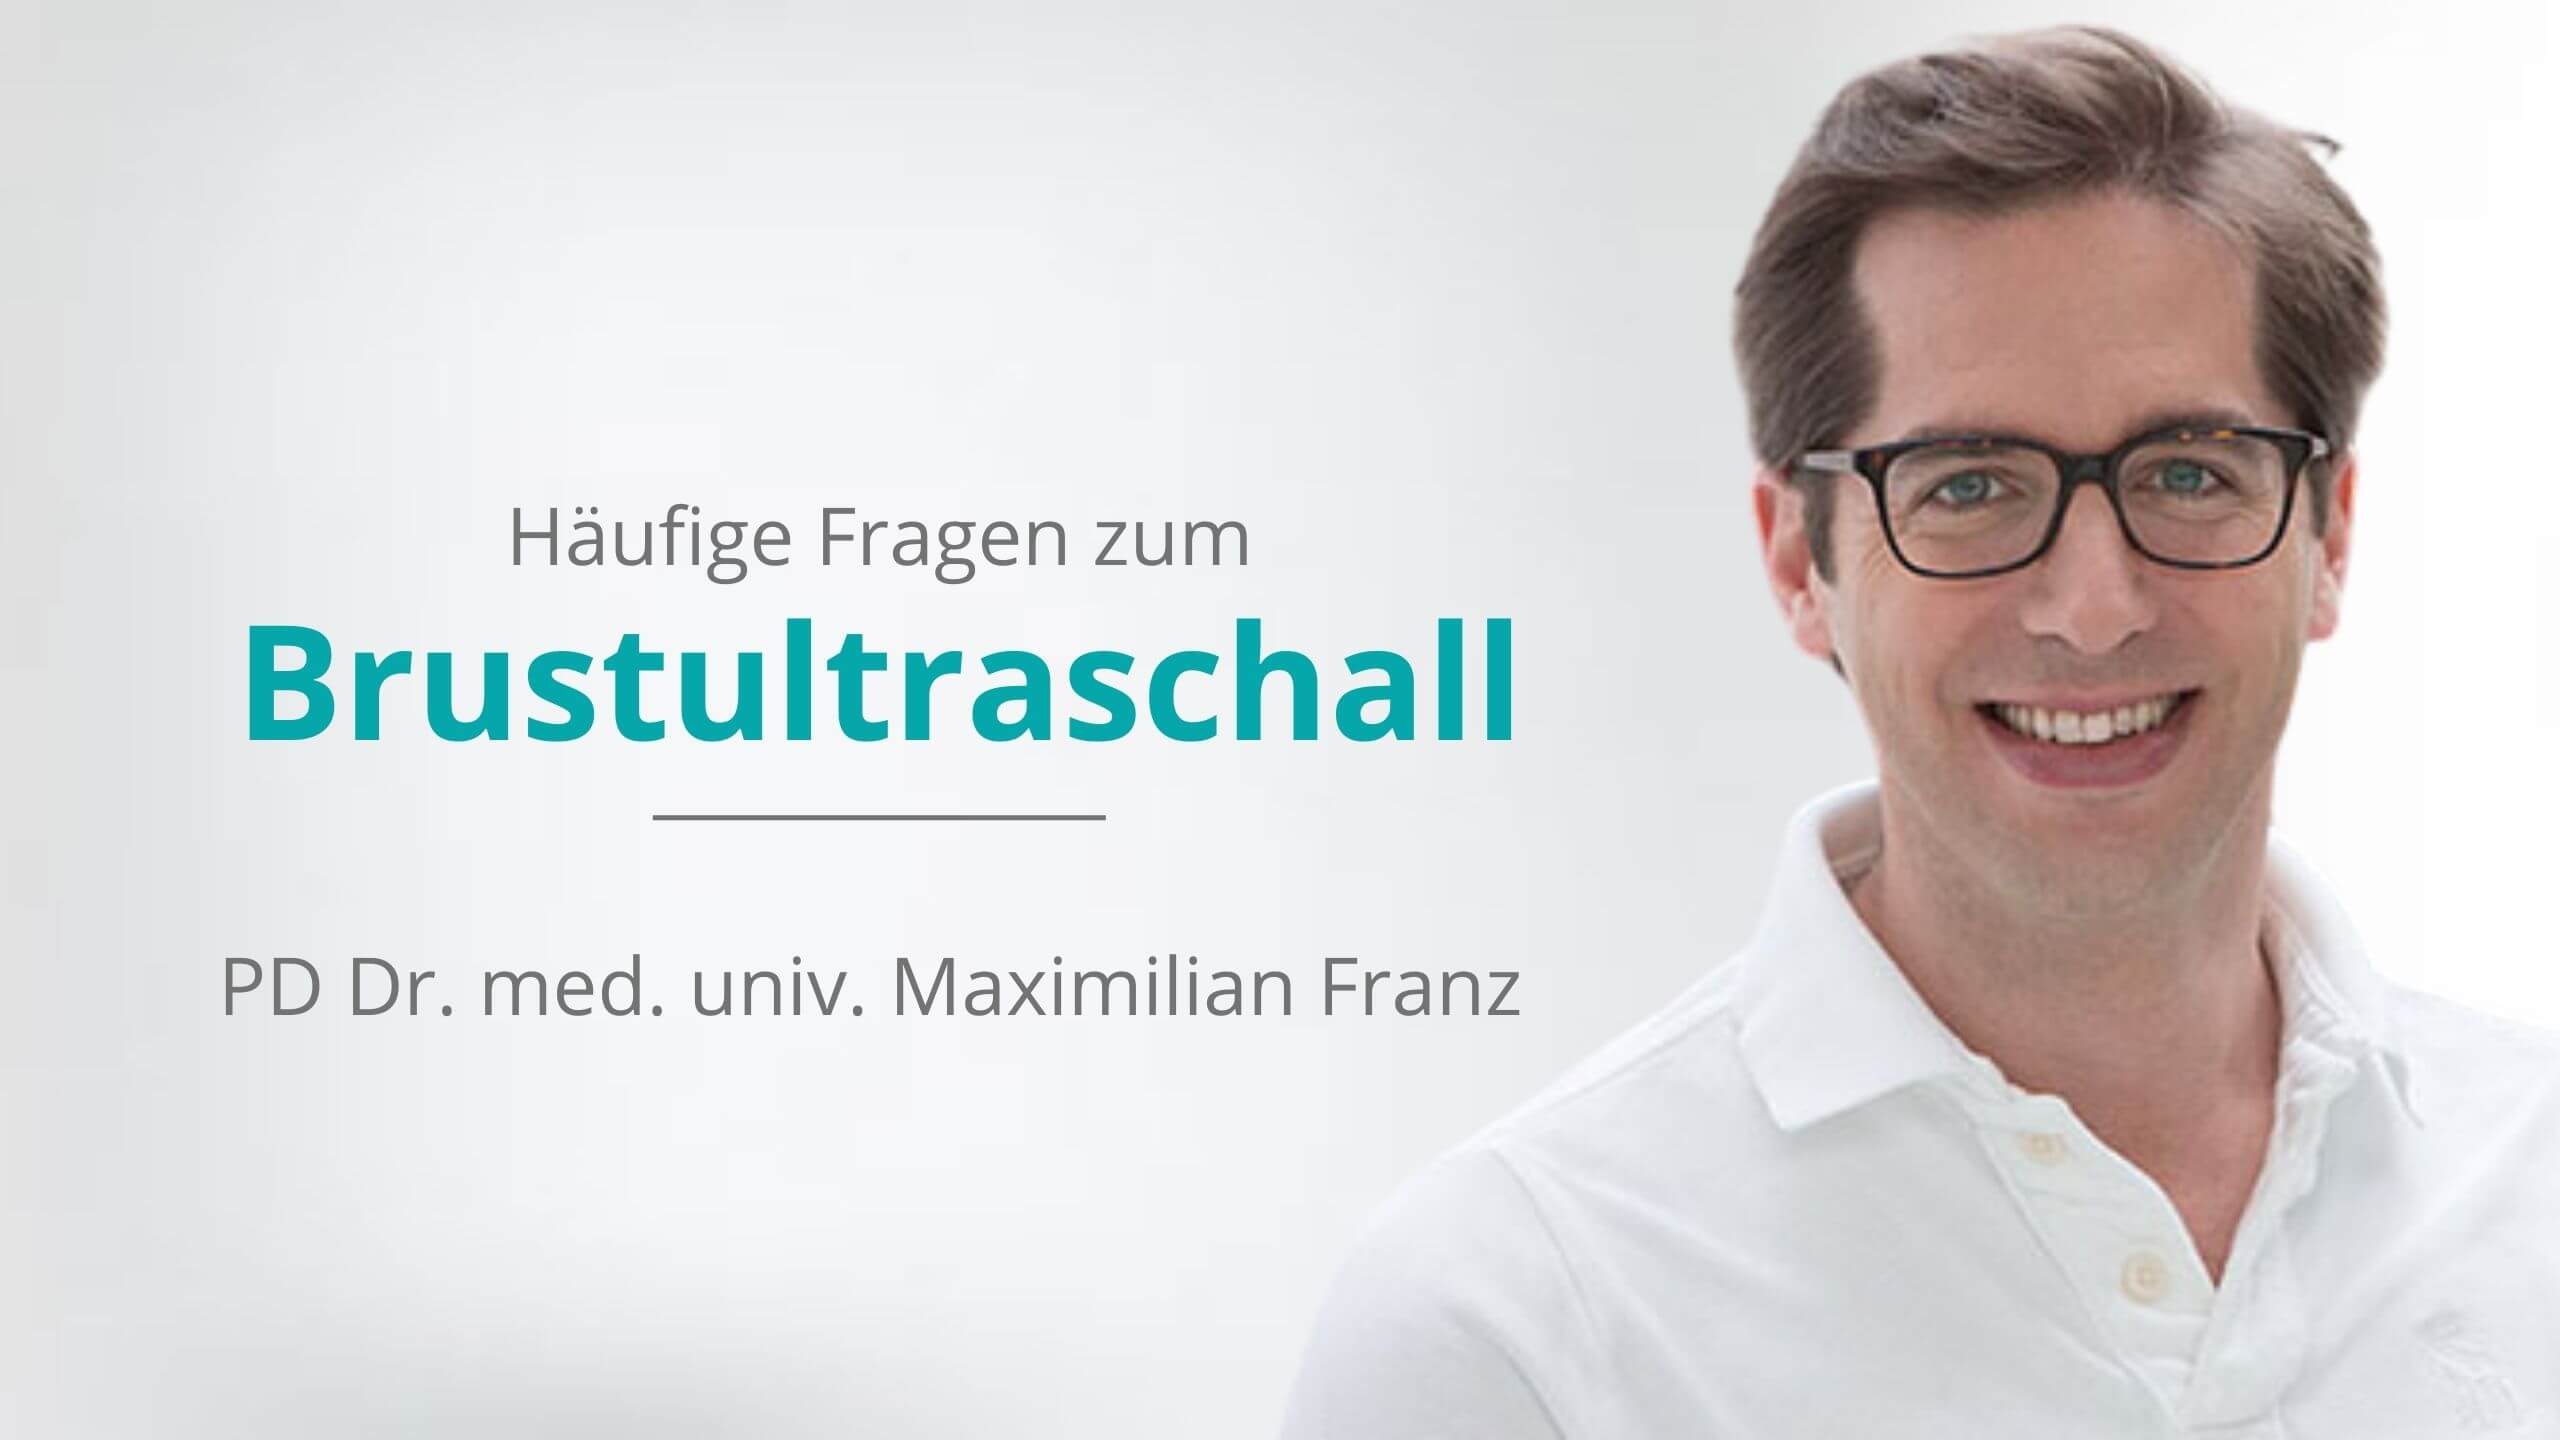 Brustultraschall München, Gynäkologe Dr. Franz